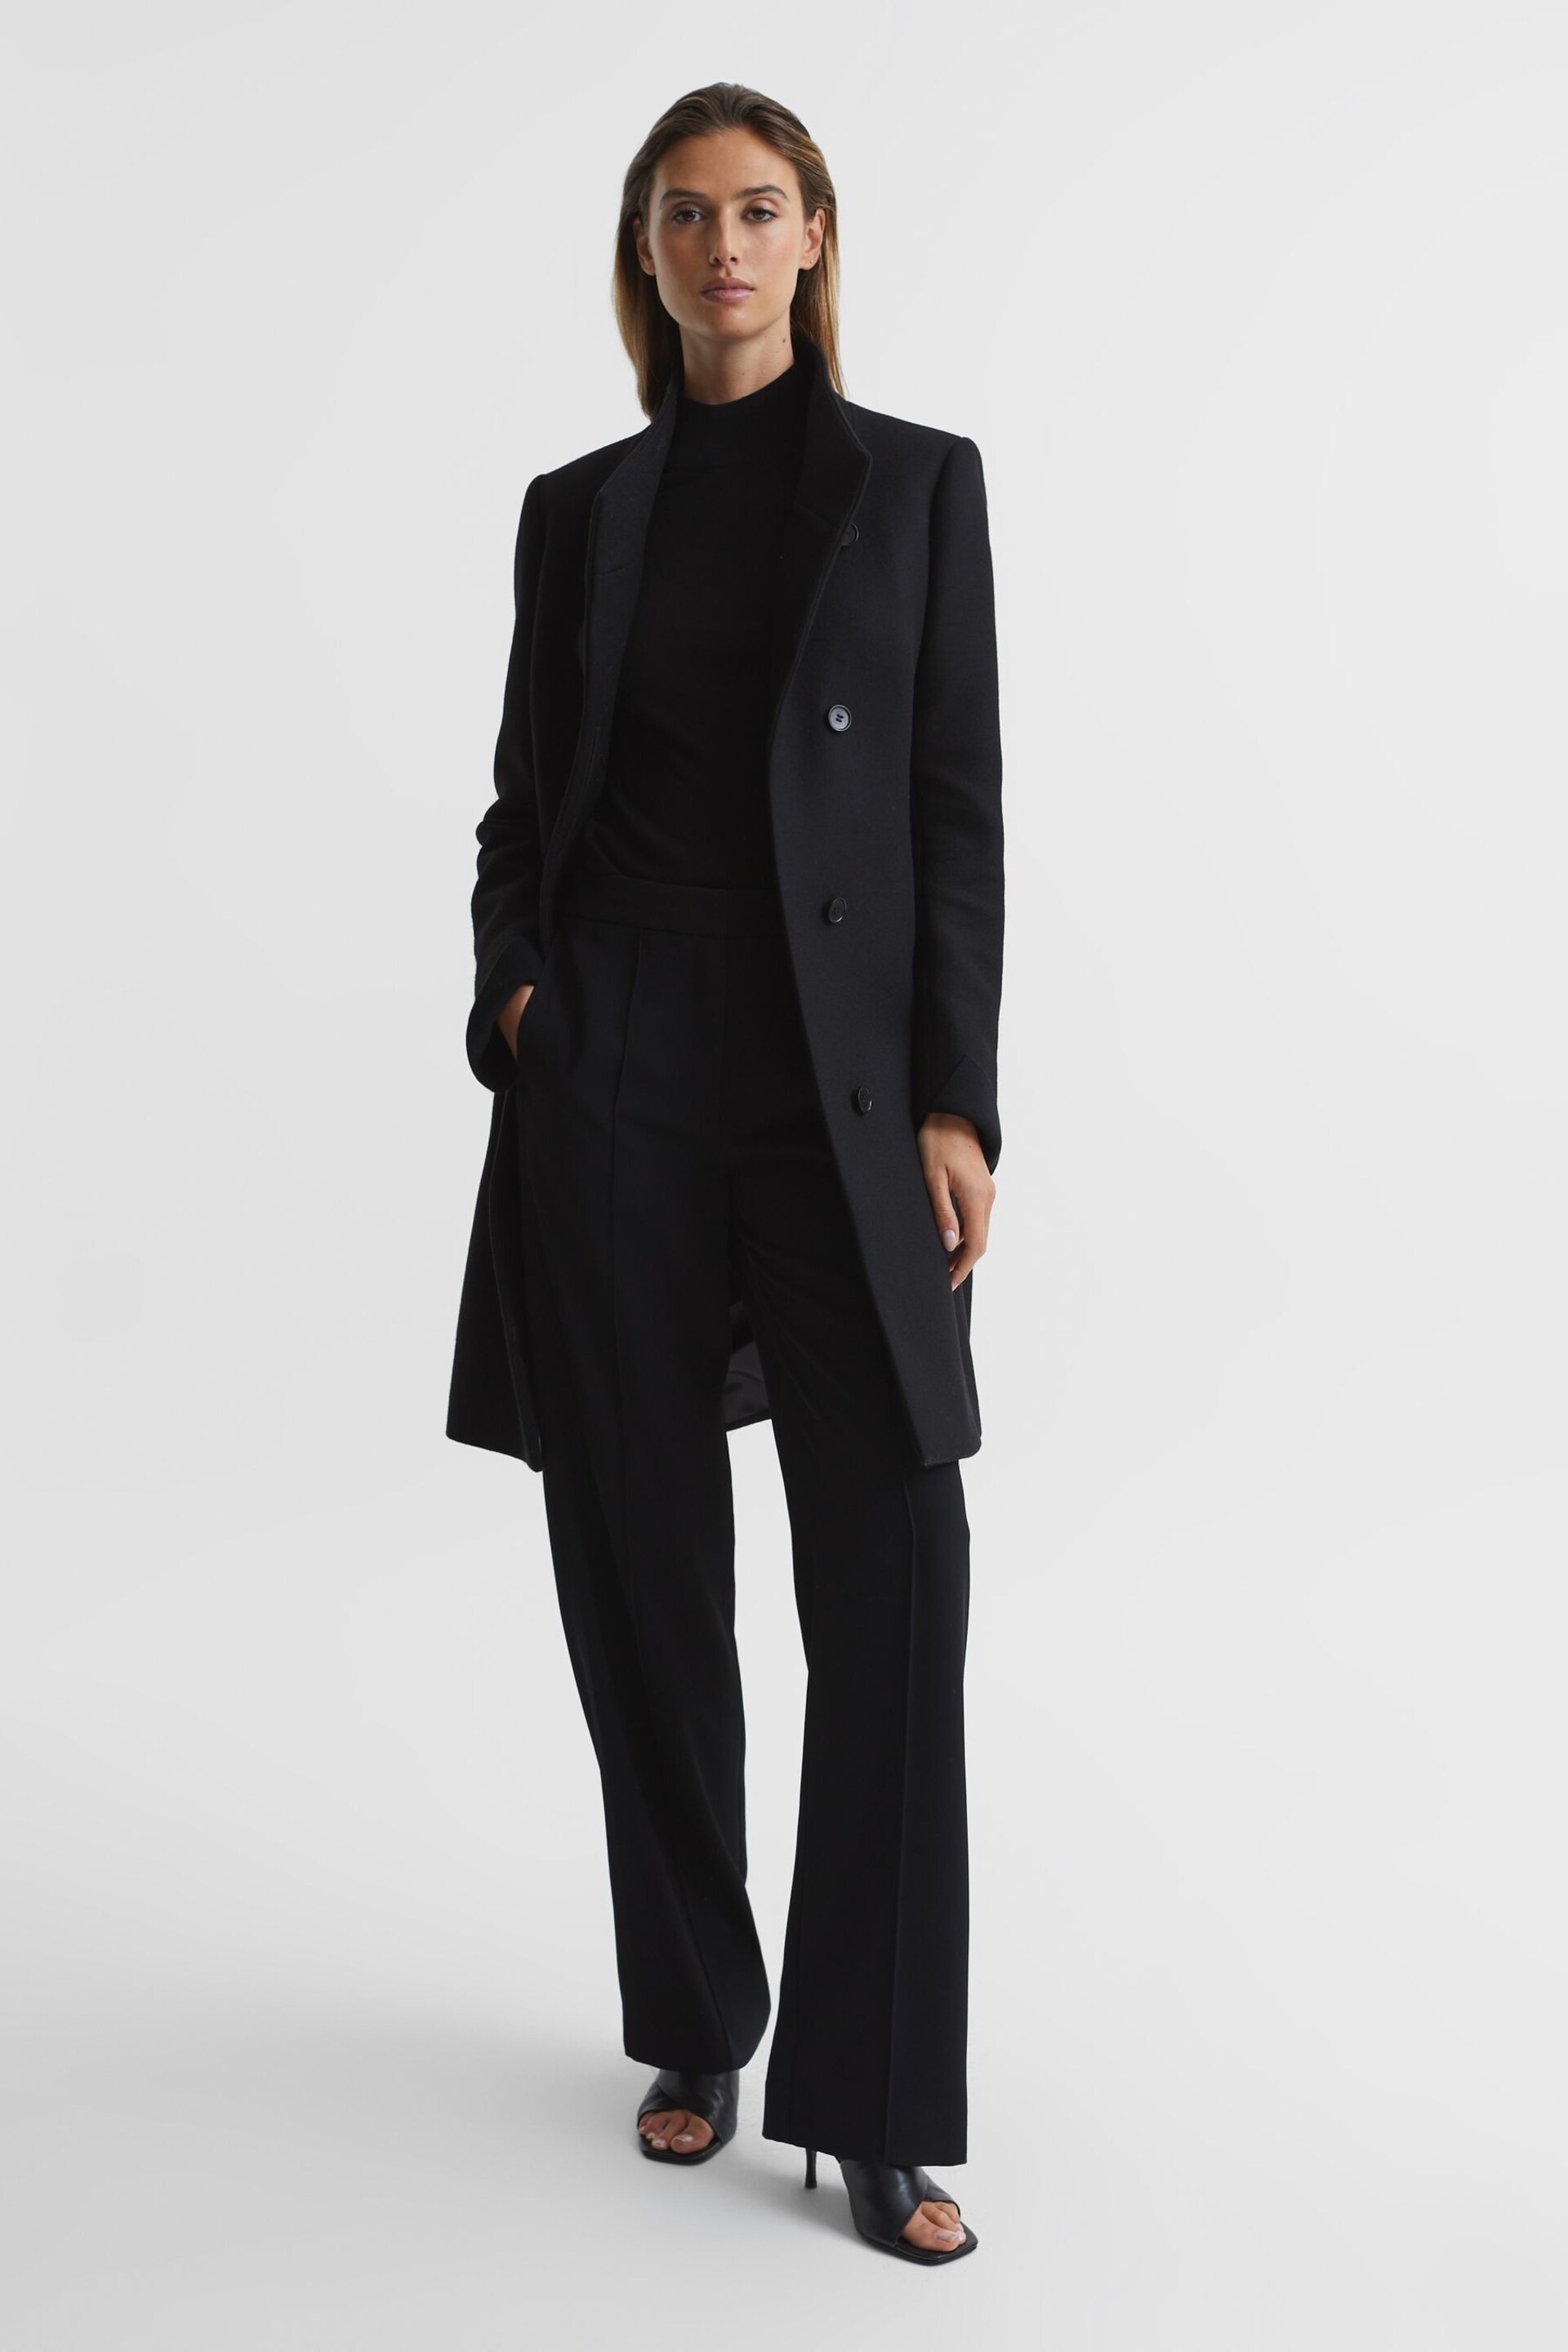 Reiss Black Mia Petite Wool Blend Mid-Length Coat - Image 3 of 7